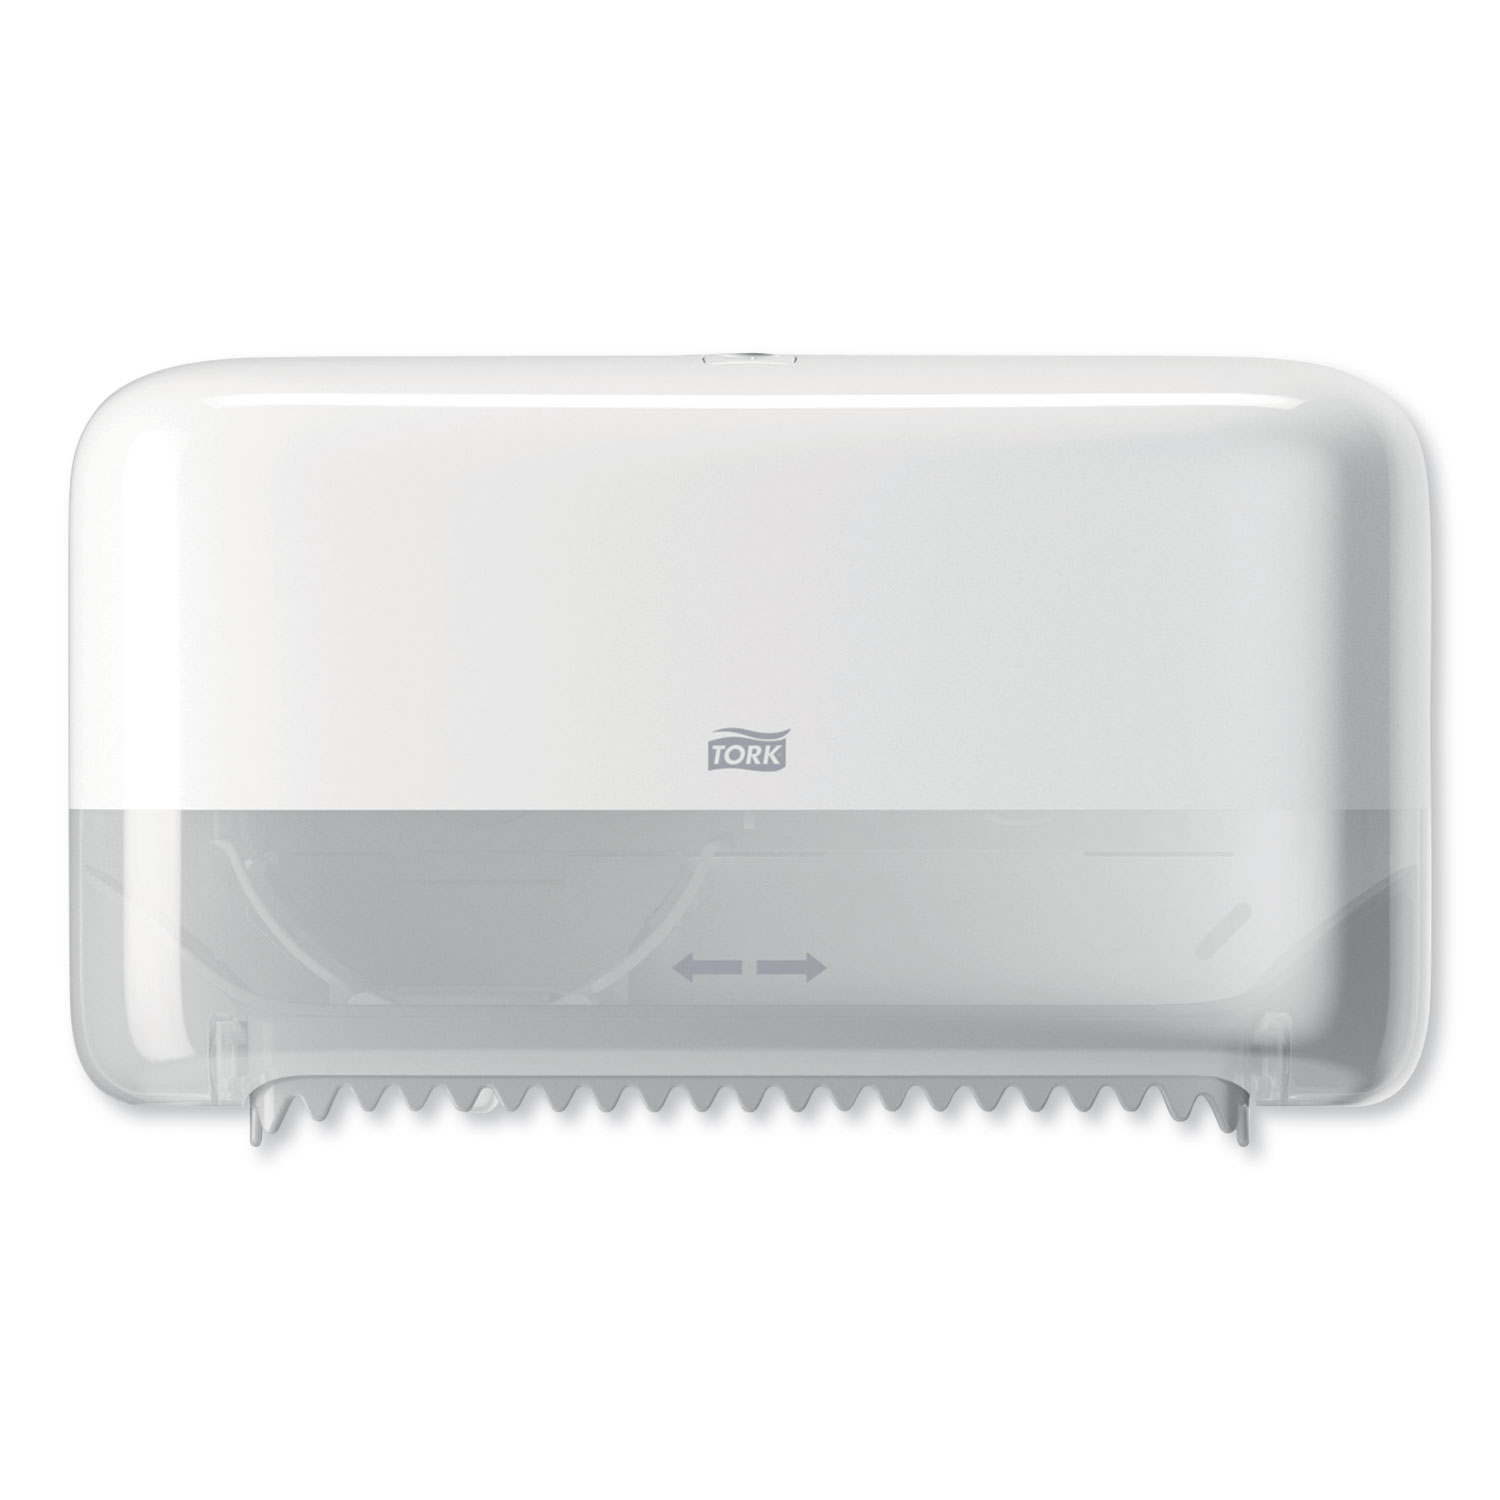  Tork 473200 Elevation Coreless High Capacity Bath Tissue Dispenser,14.17 x 5.08 x 8.23,White (TRK473200) 